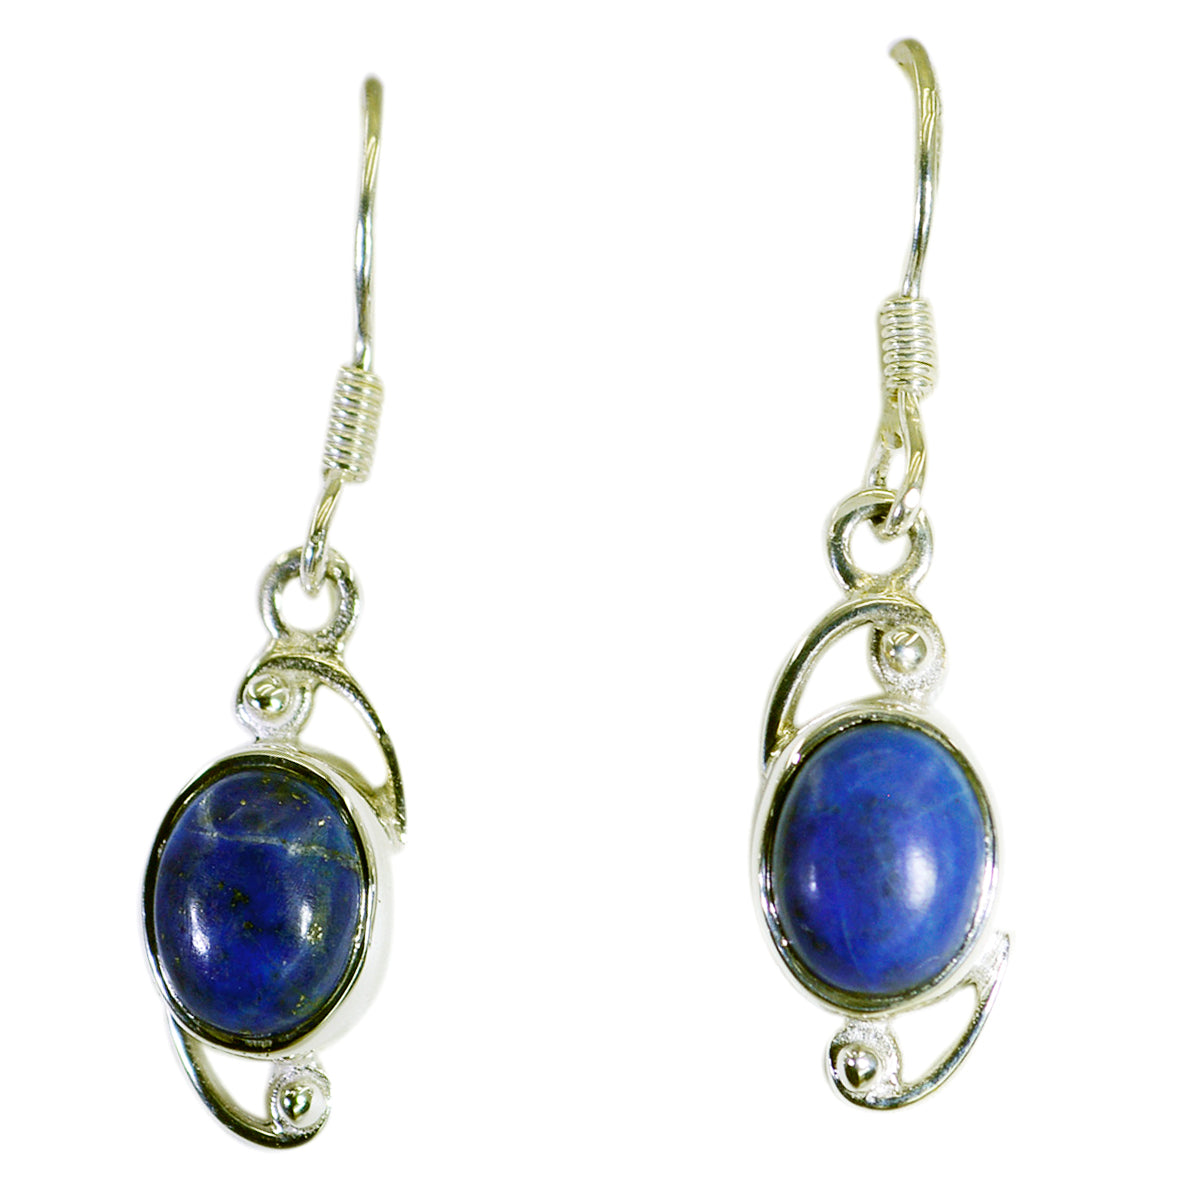 Riyo Good Gemstones oval Cabochon Nevy Blue Lapis Lazuli Silver Earrings daughter's day gift